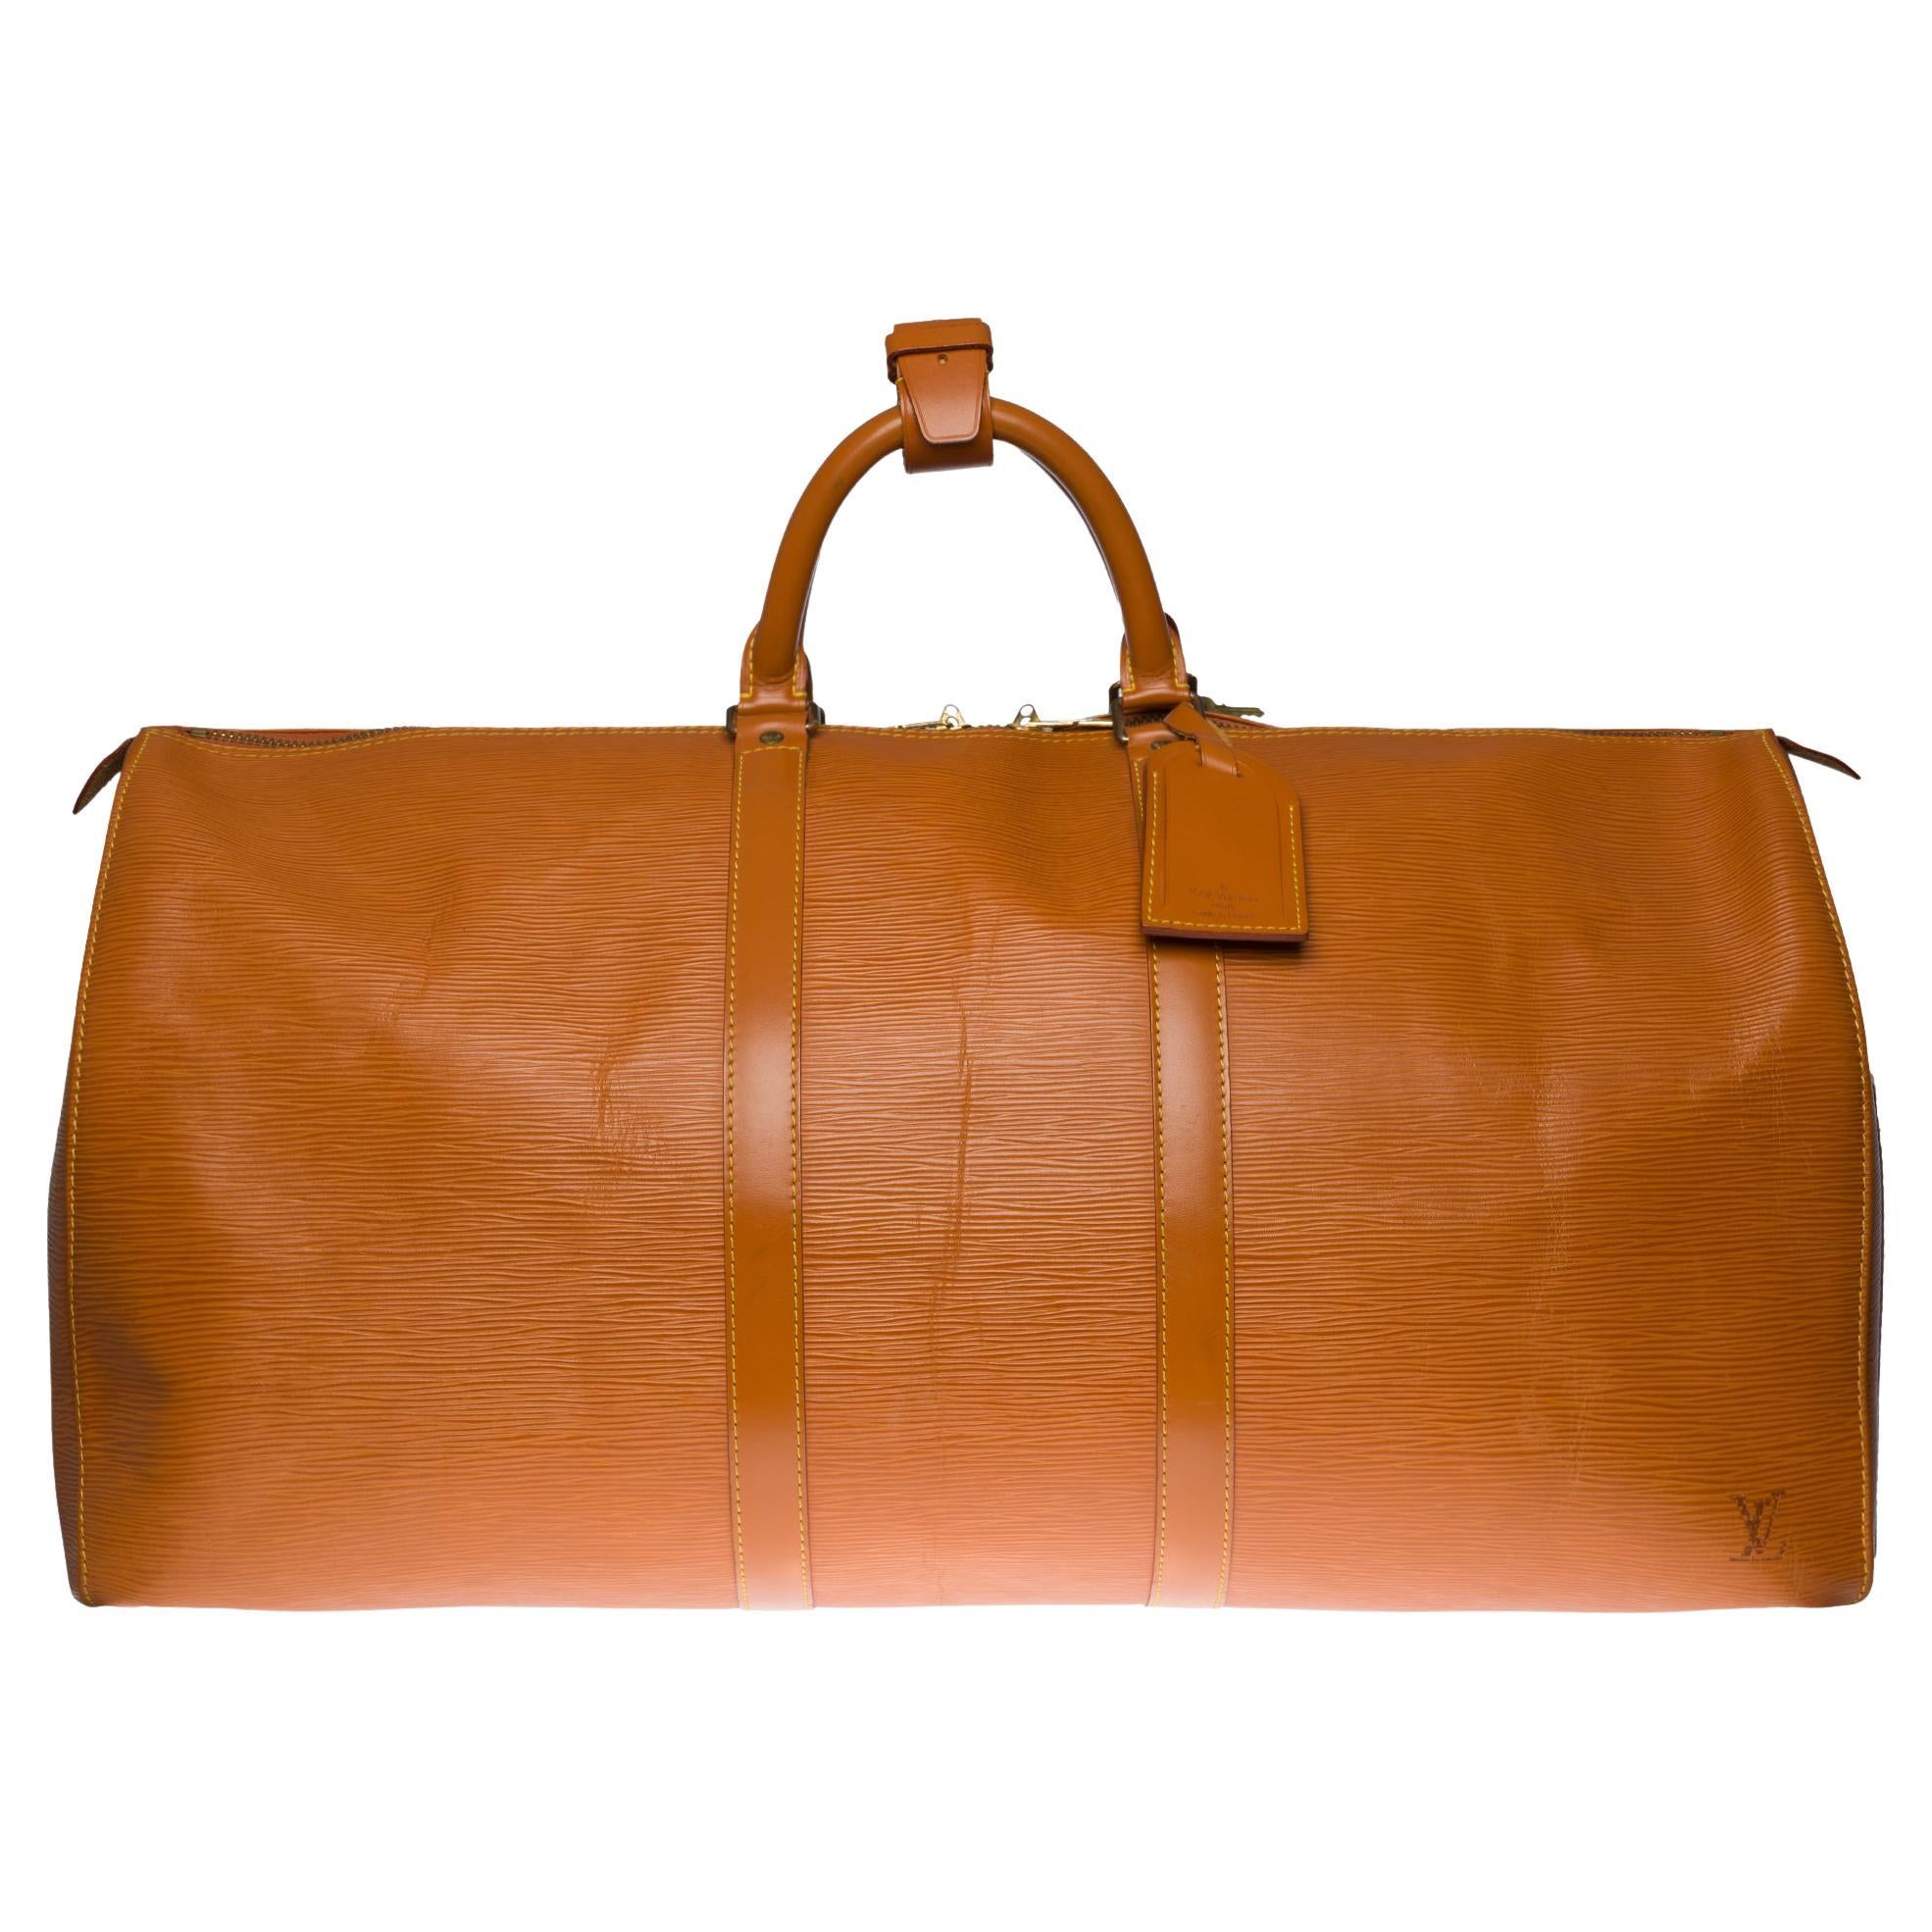 Louis Vuitton Keepall 50 Travel bag in Cognac épi leather